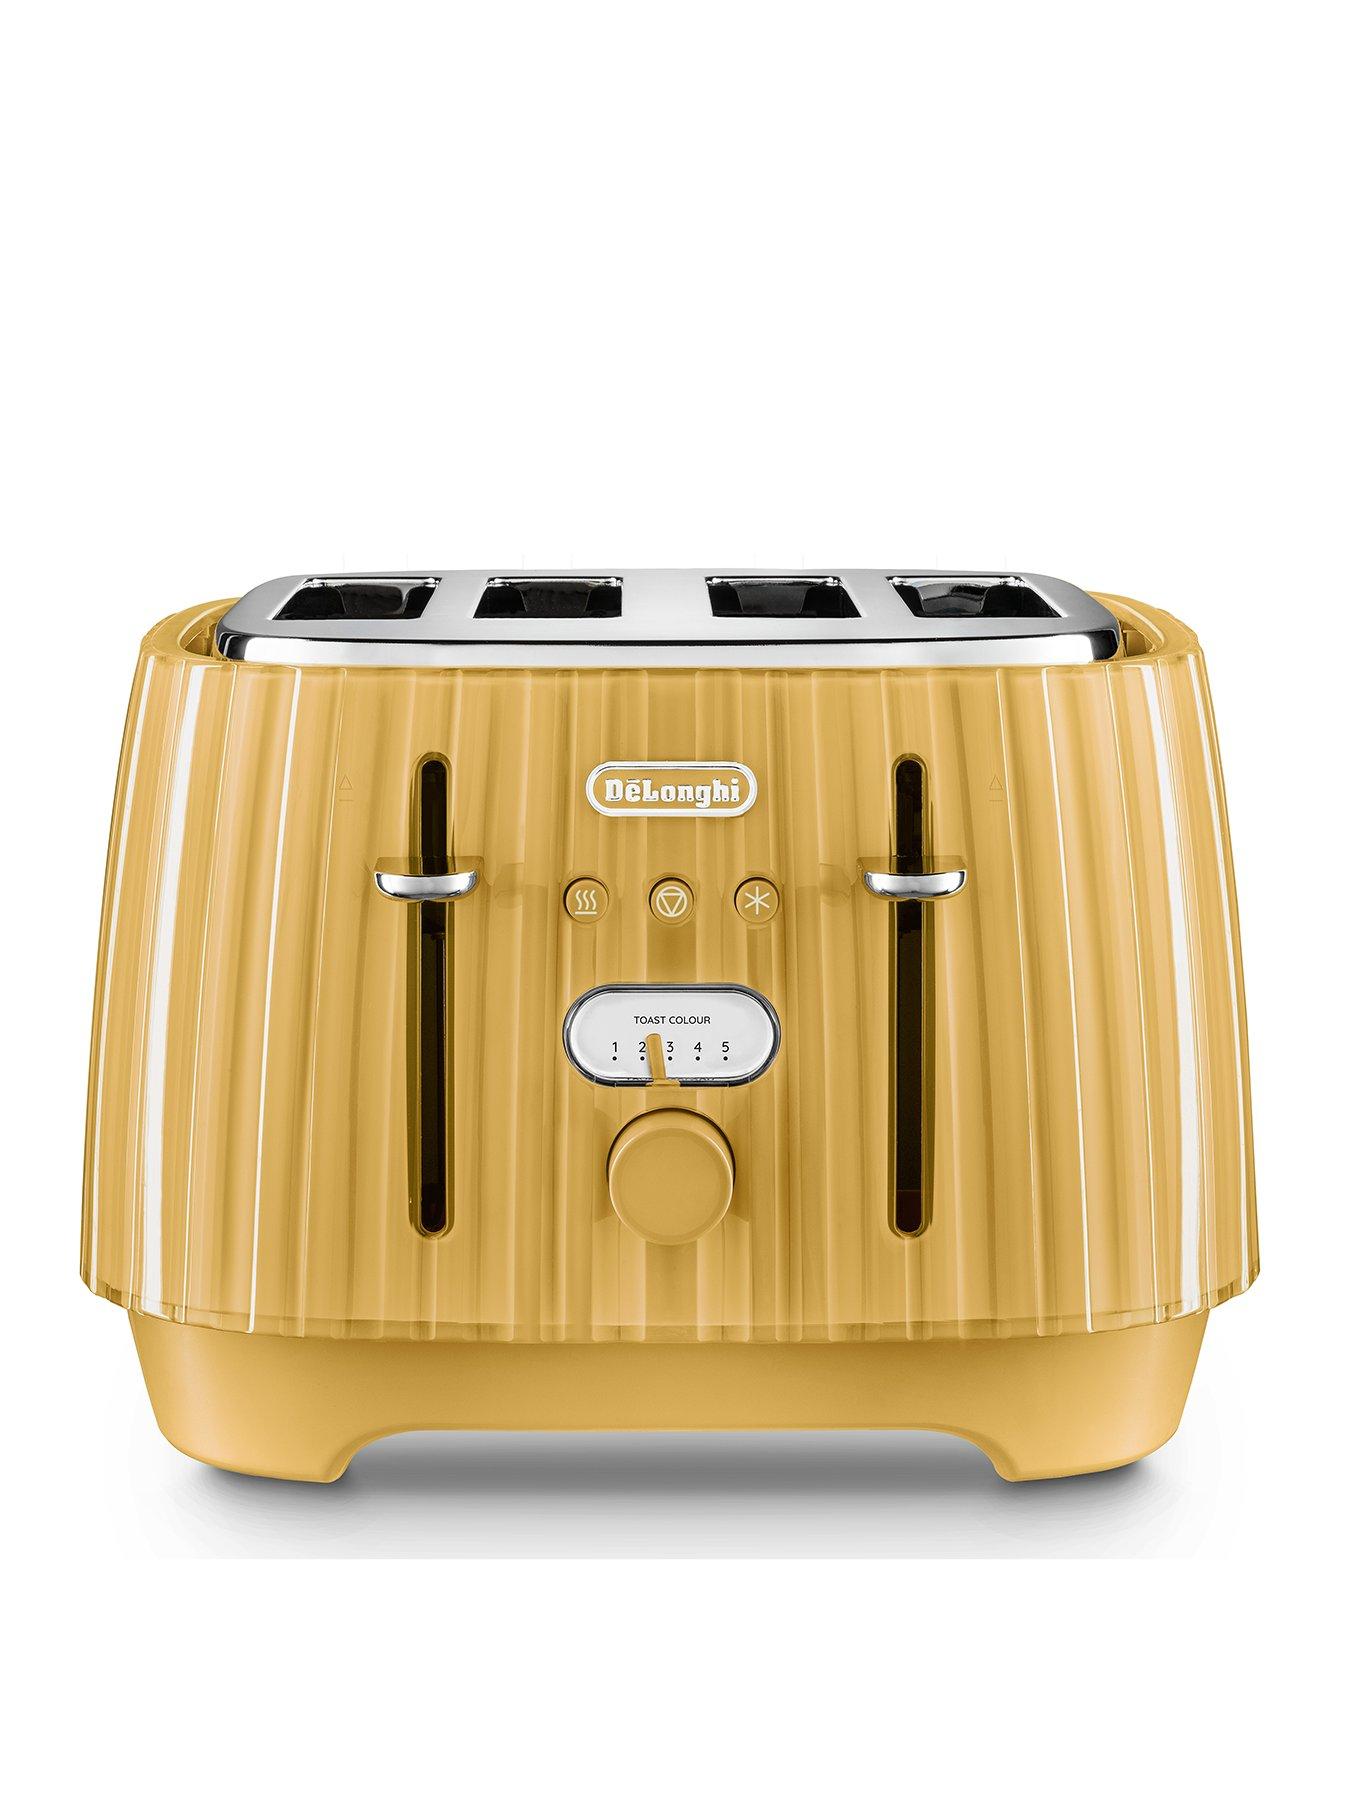 https://media.very.ie/i/littlewoodsireland/V94GY_SQ1_0000000088_NO_COLOR_SLf/delonghi-delonghi-ballerina-4-slice-toaster-yellow.jpg?$180x240_retinamobilex2$&$roundel_lwireland$&p3_img=video_roundel